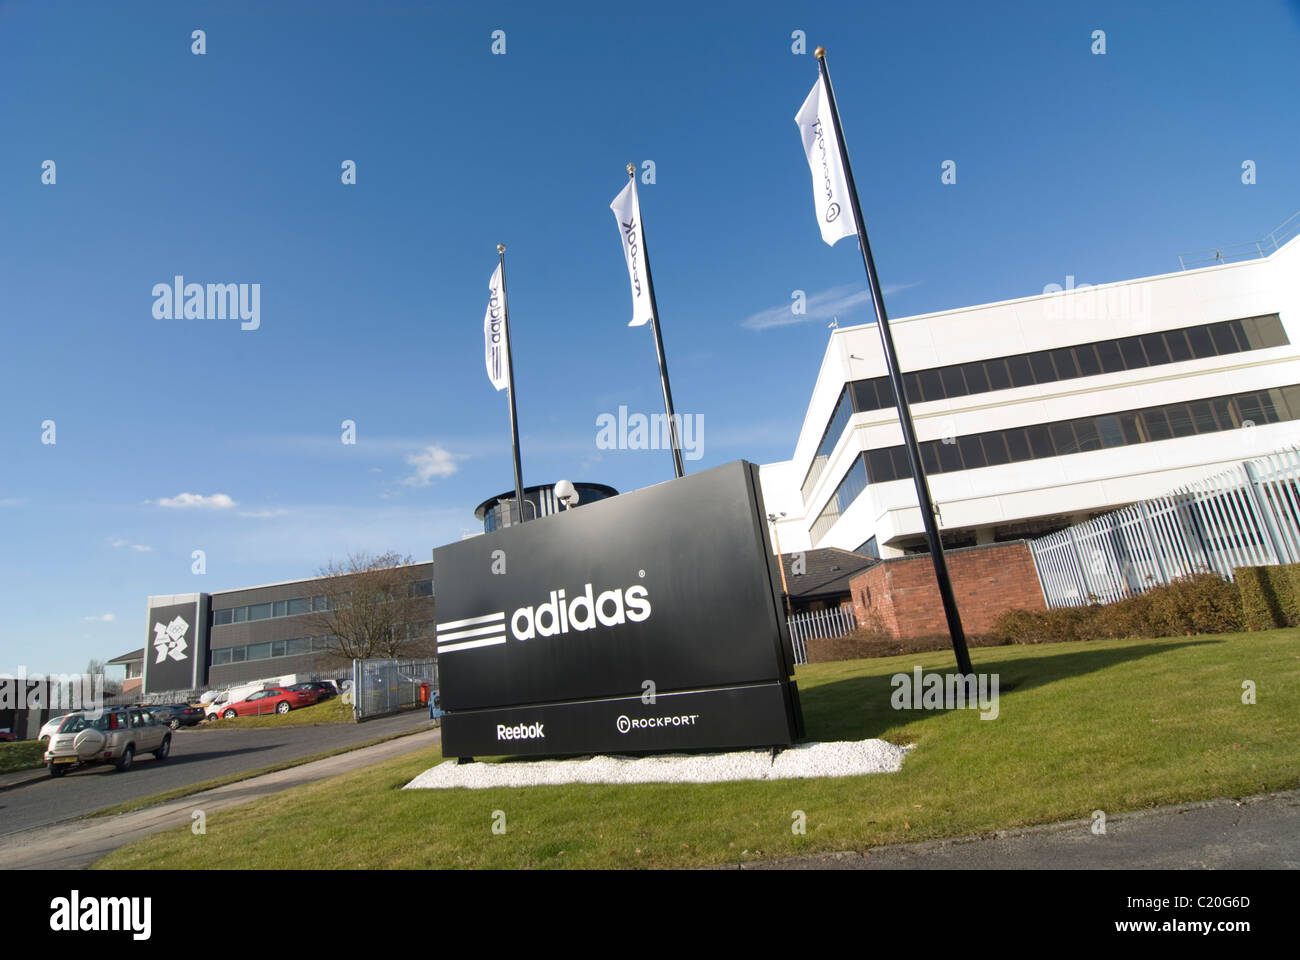 adidas stockport head office